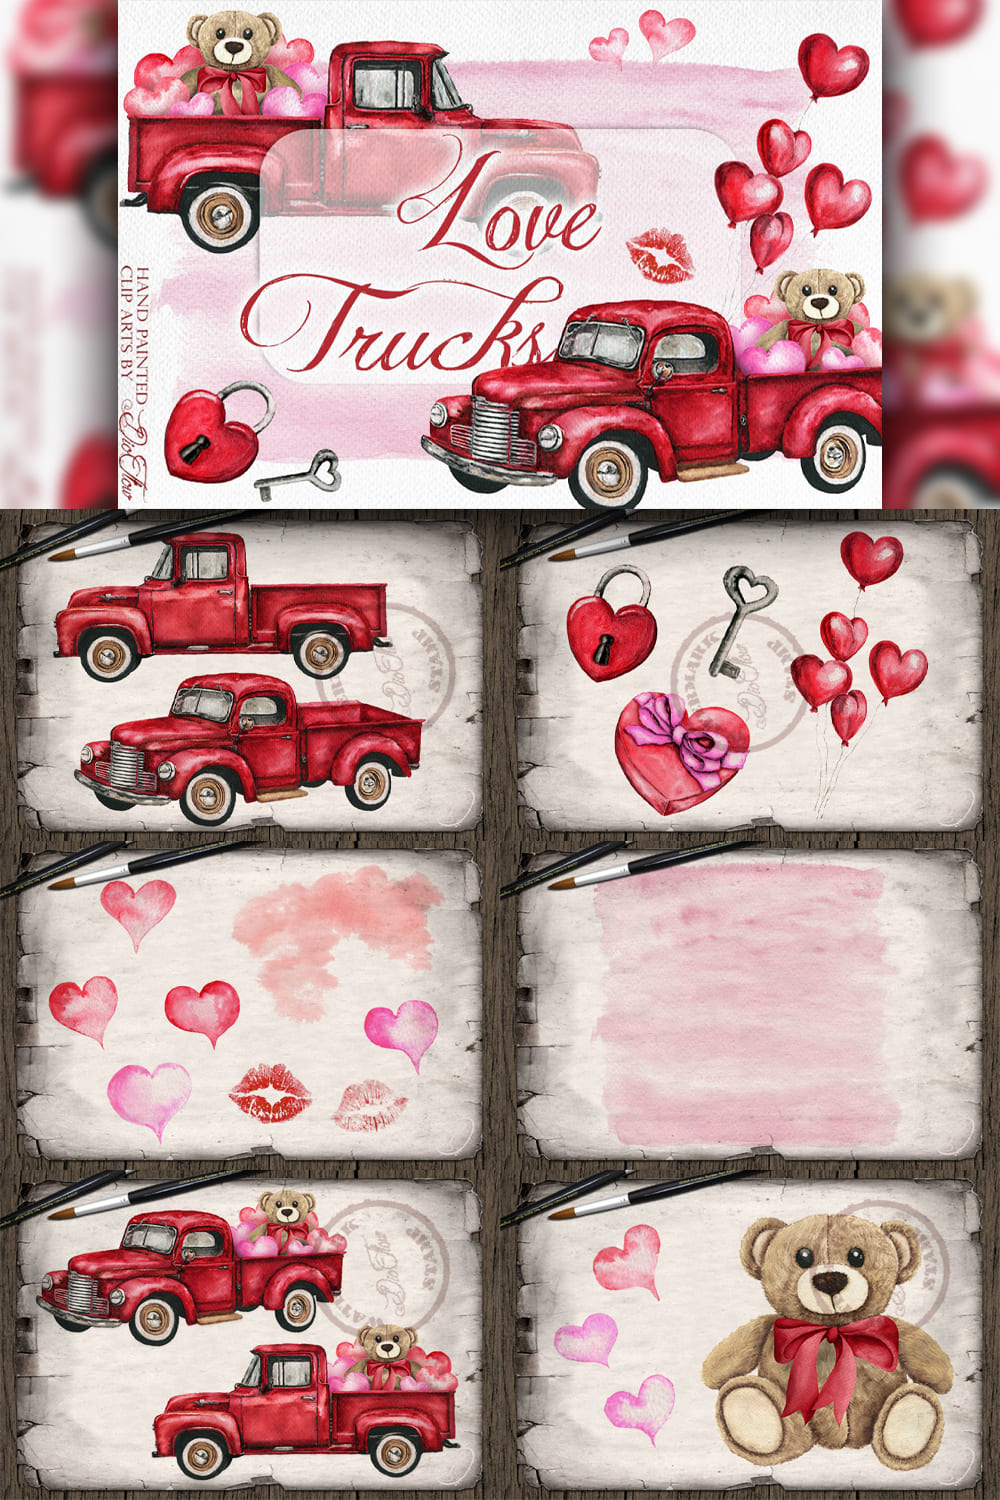 7217540 love truck watercolor illustration pinterest 1000 1500